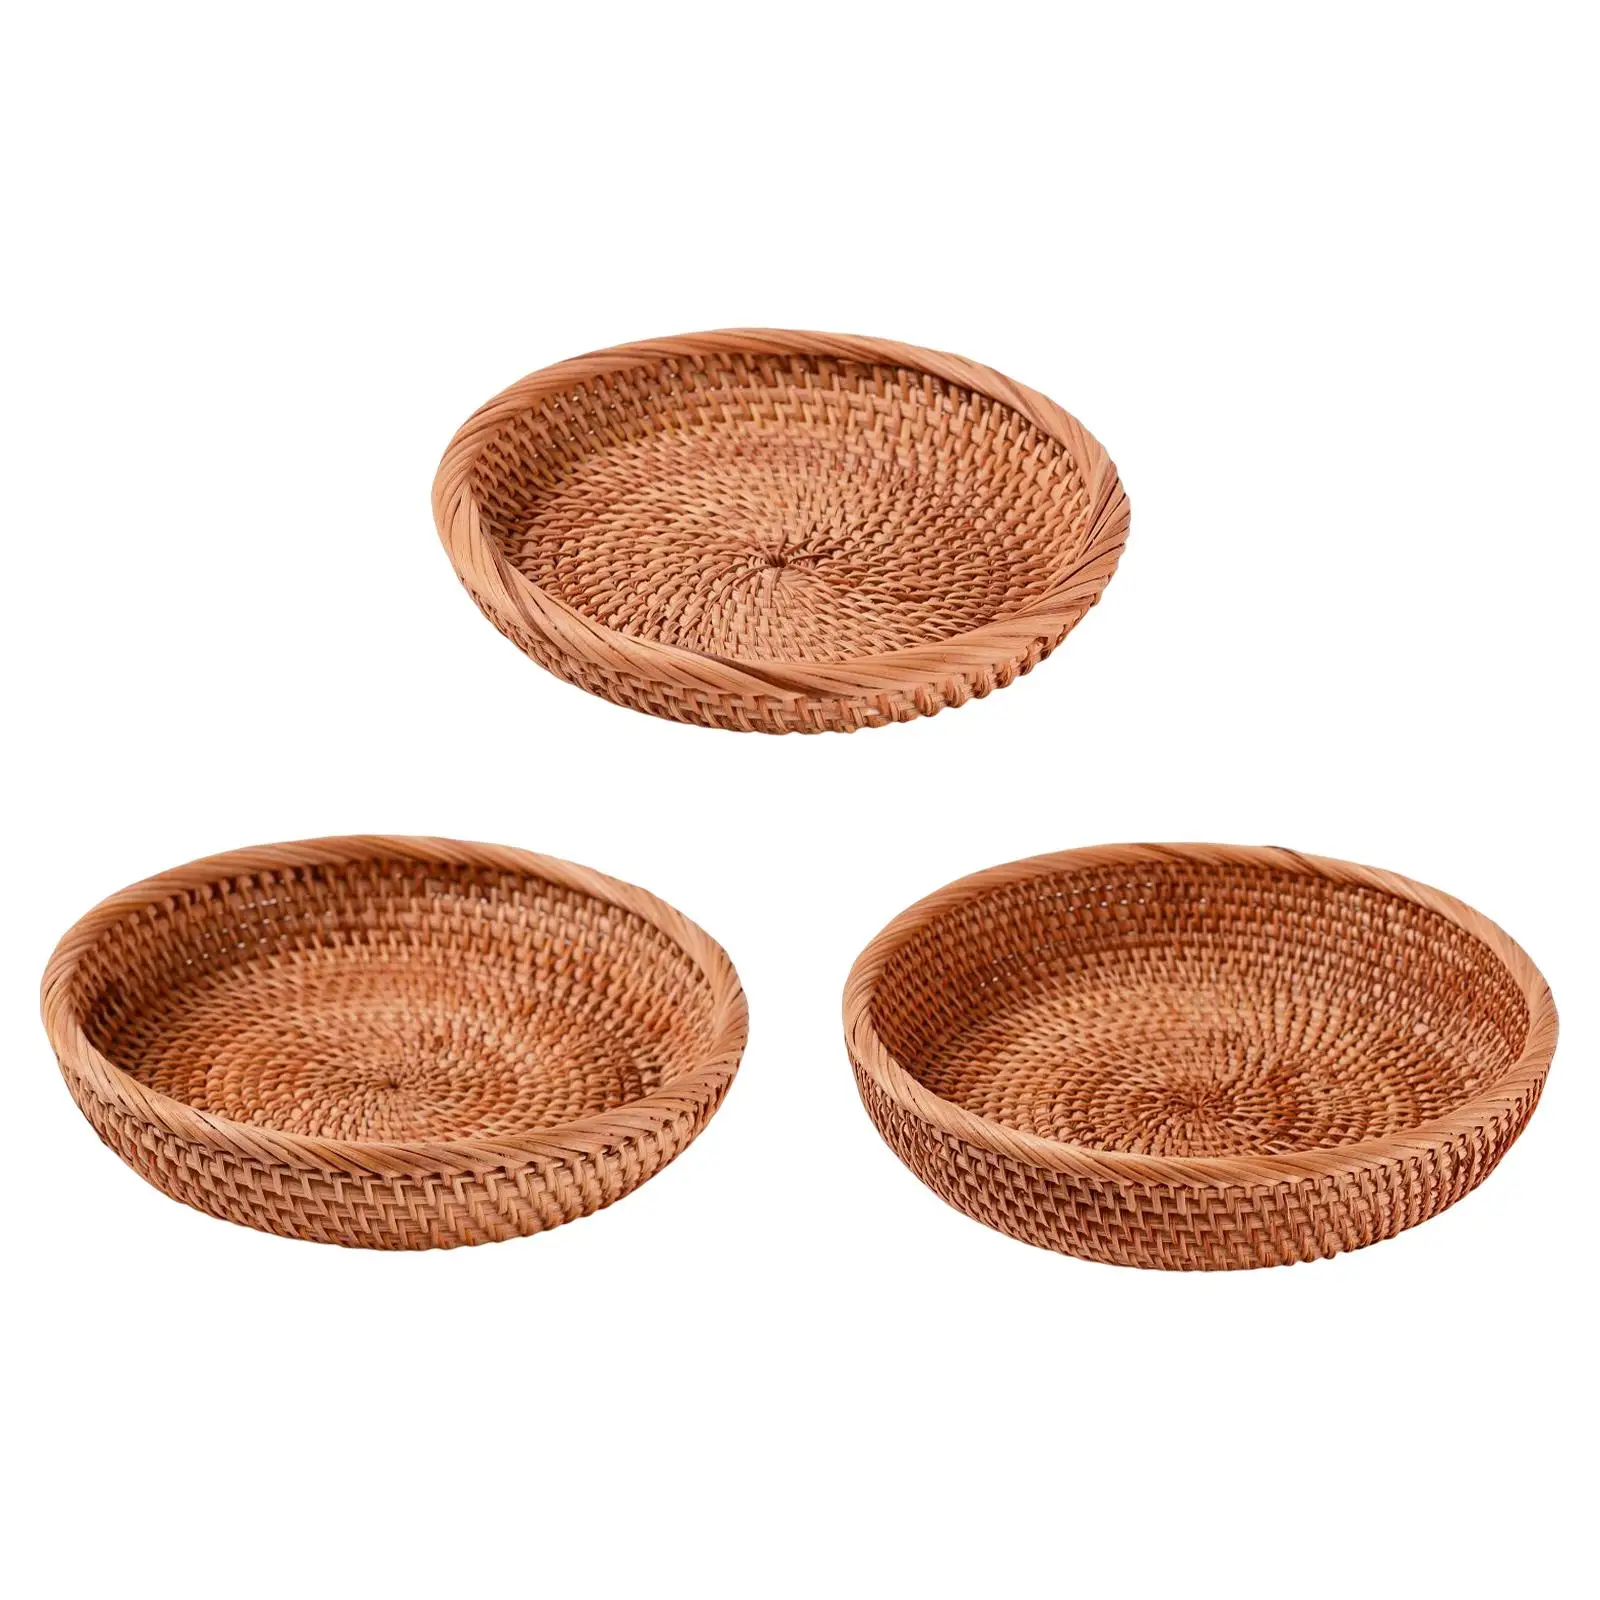 Wicker Bowl Wicker Fruit Basket Tabletop Decorative, handwoven storage Tray